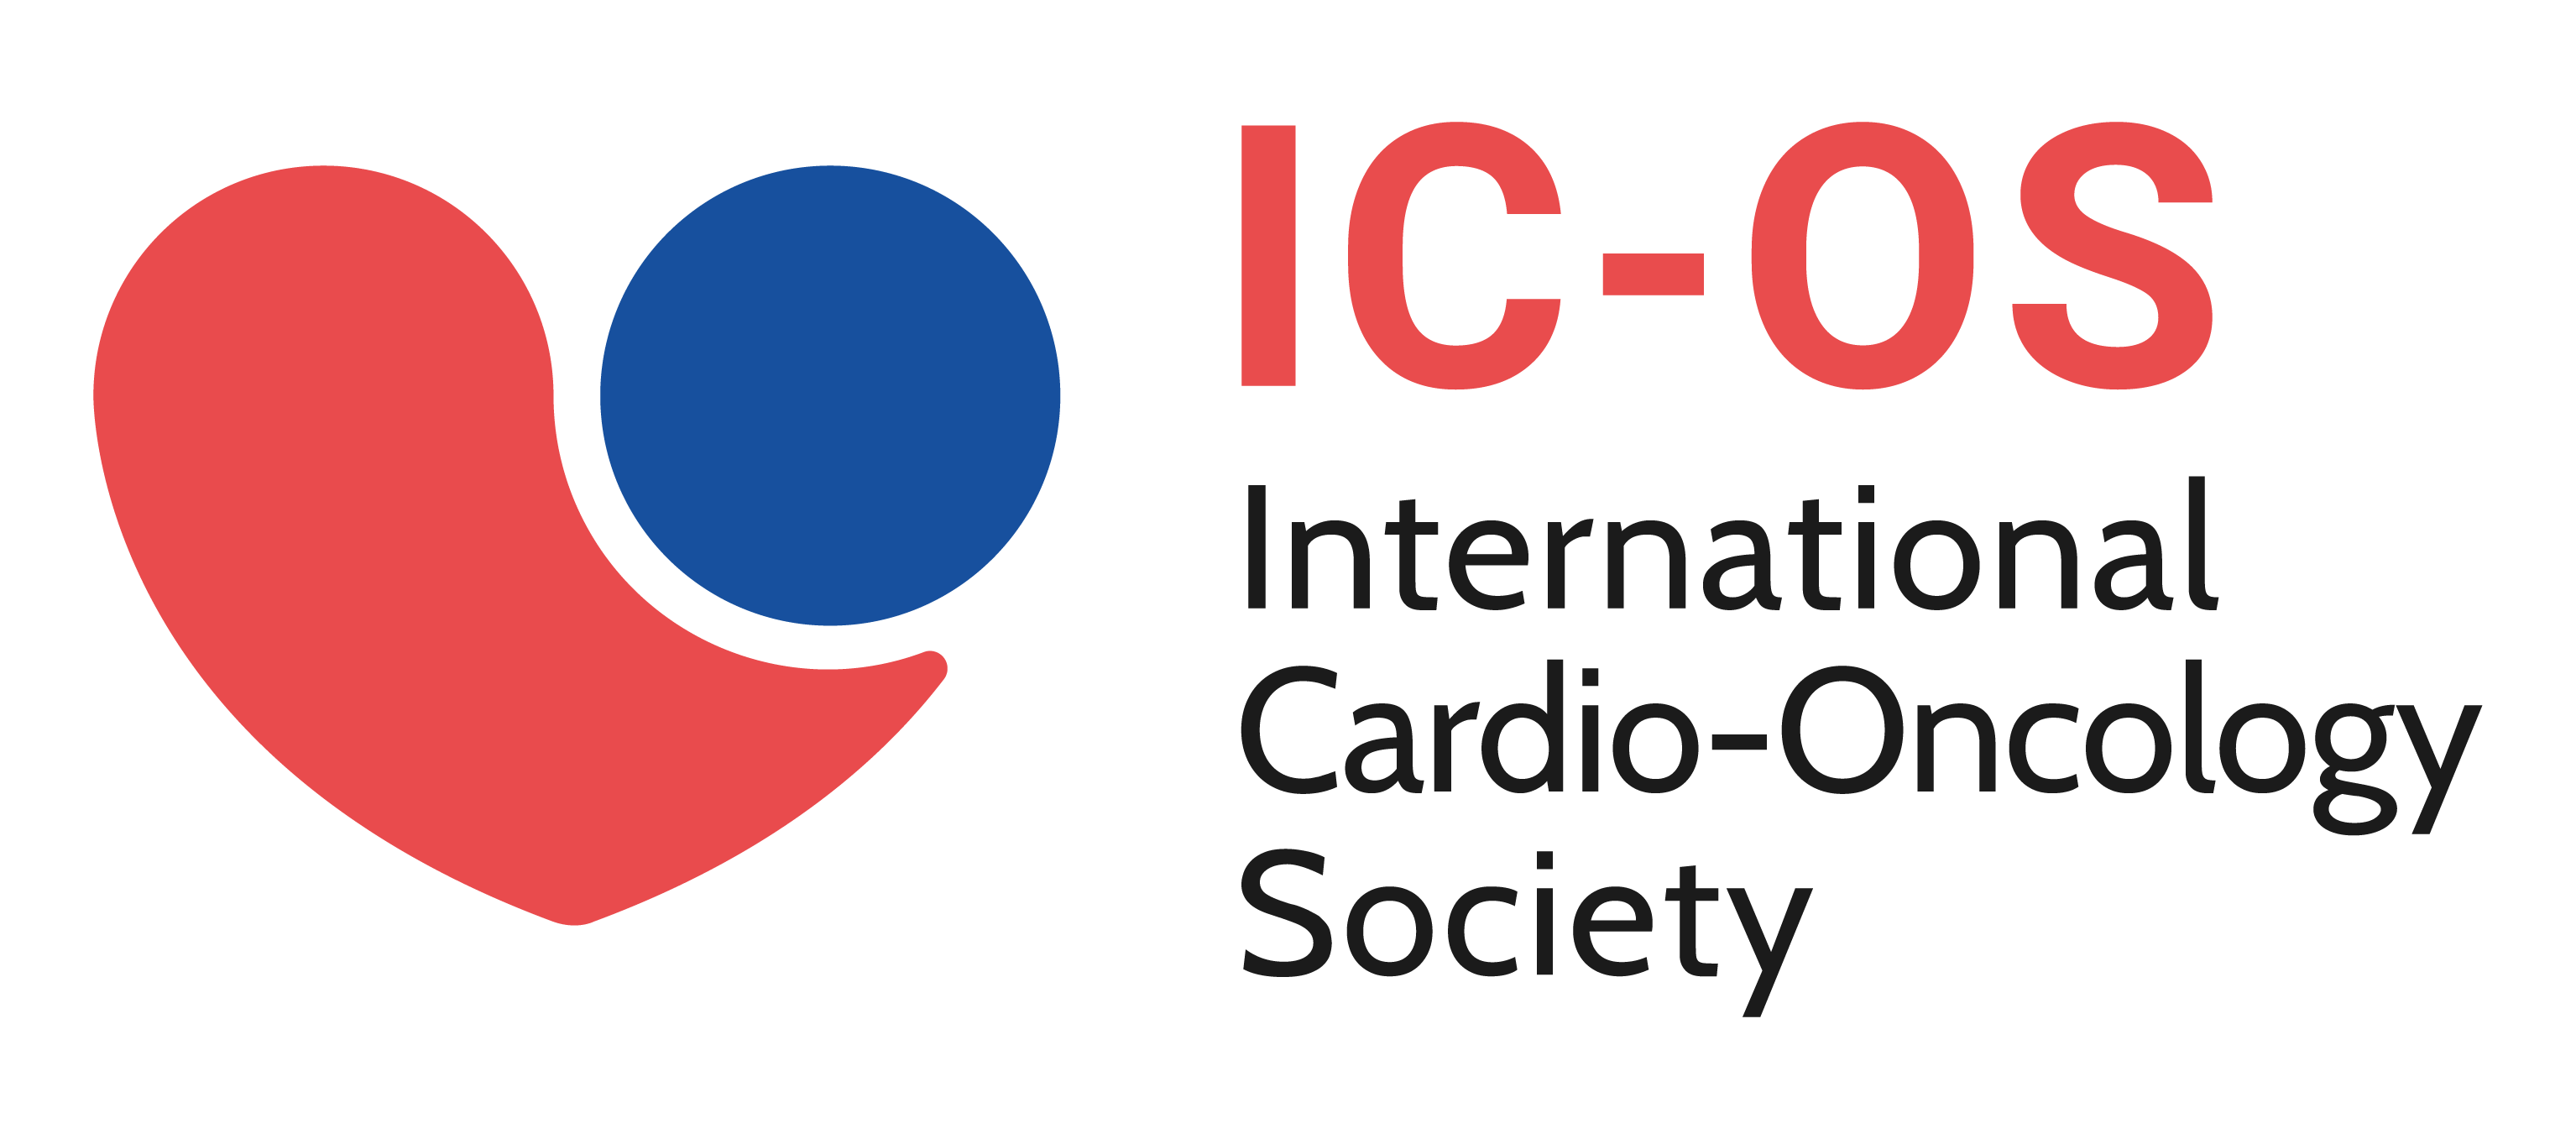 ICOS Cardio Onc logo